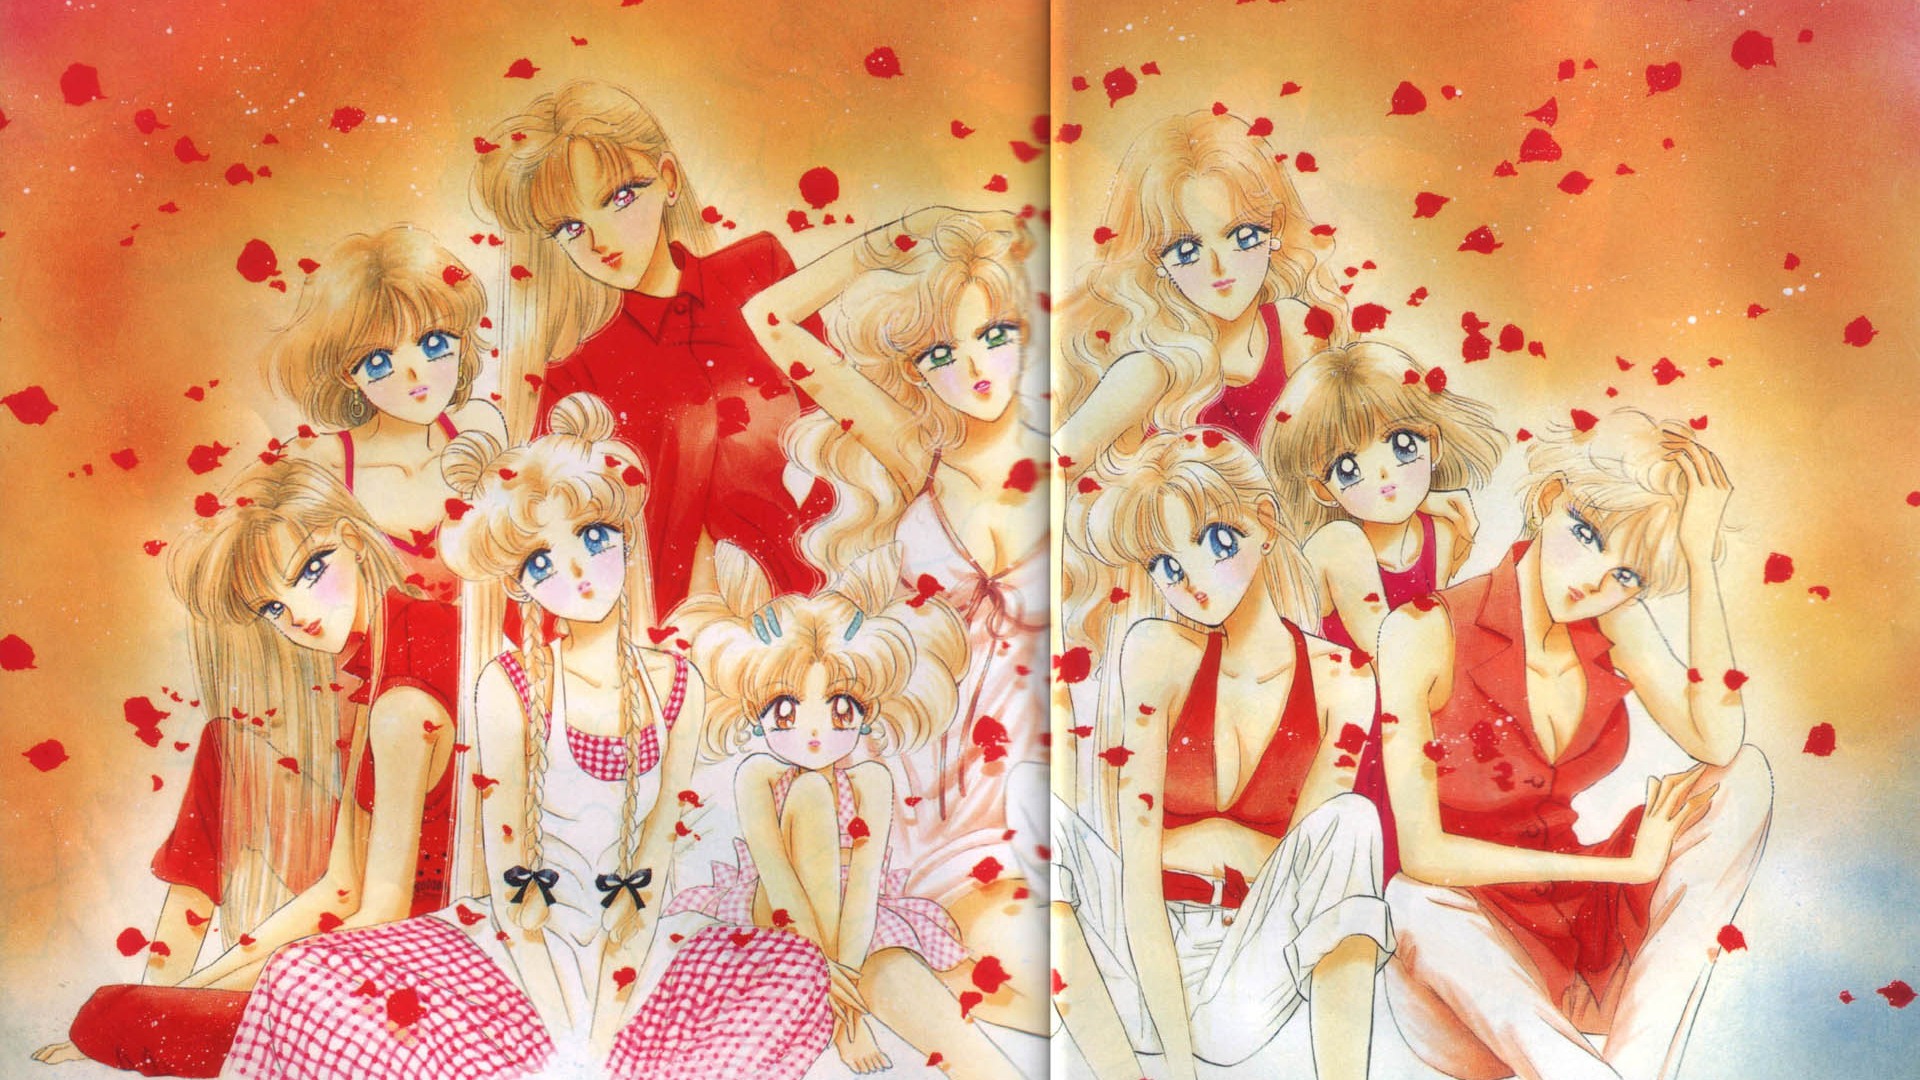 Sailor Moon Hd Wallpapers 4 19x1080 Wallpaper Download Sailor Moon Hd Wallpapers Anime Wallpapers V3 Wallpaper Site